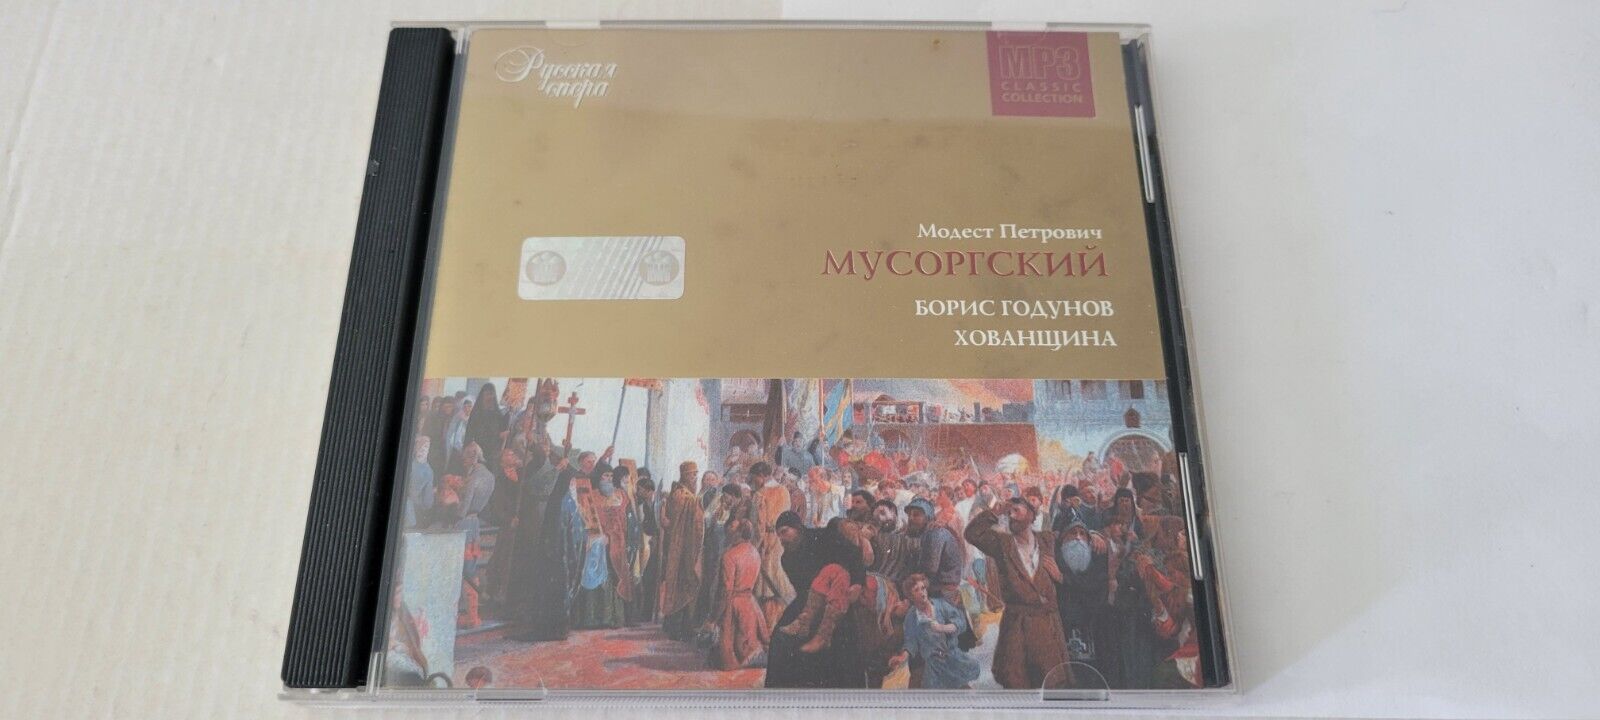 Russian Opera Мусоргский  Modest  Mussorgsky Boris Godunov Khovanshchina MP3